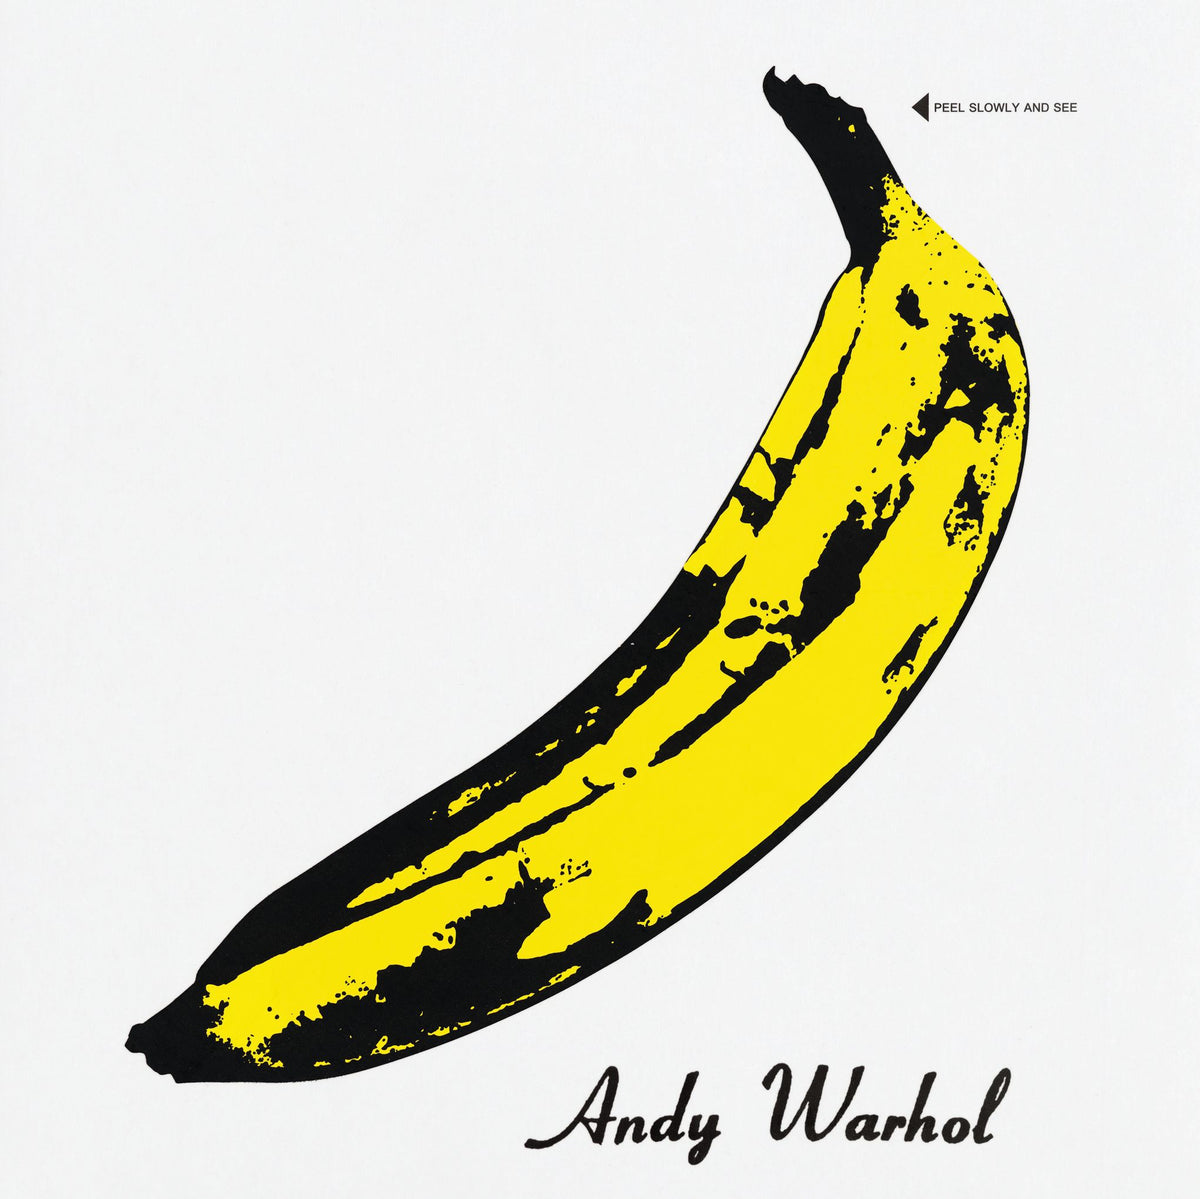 Velvet Underground & Nico - The Velvet Underground & Nico (45th Anniversary Edition)